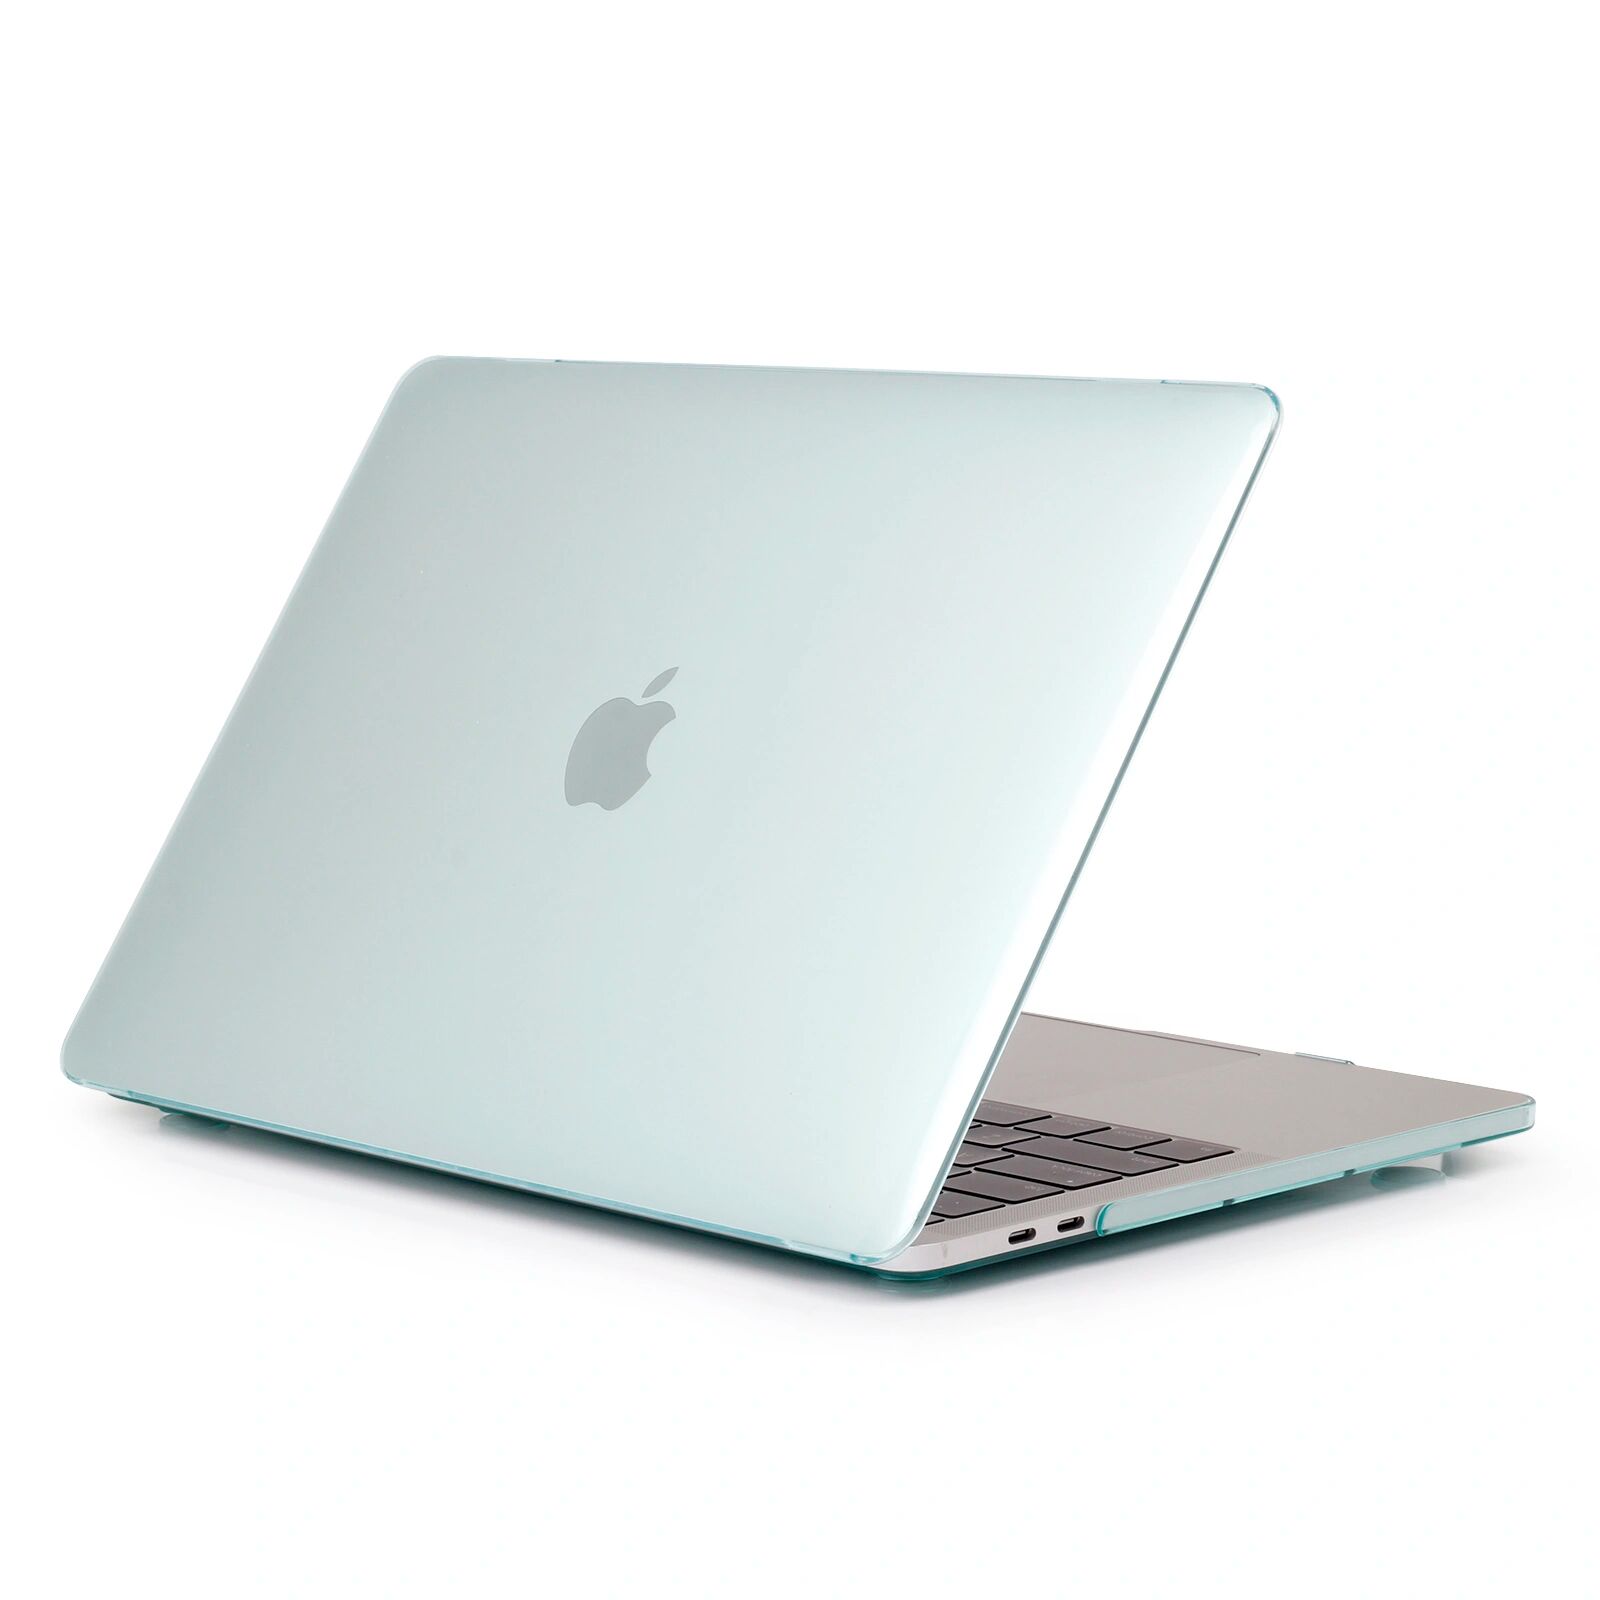 iPouzdro.cz Ochranný kryt na MacBook Pro 13 (2012-2015) - Crystal Green